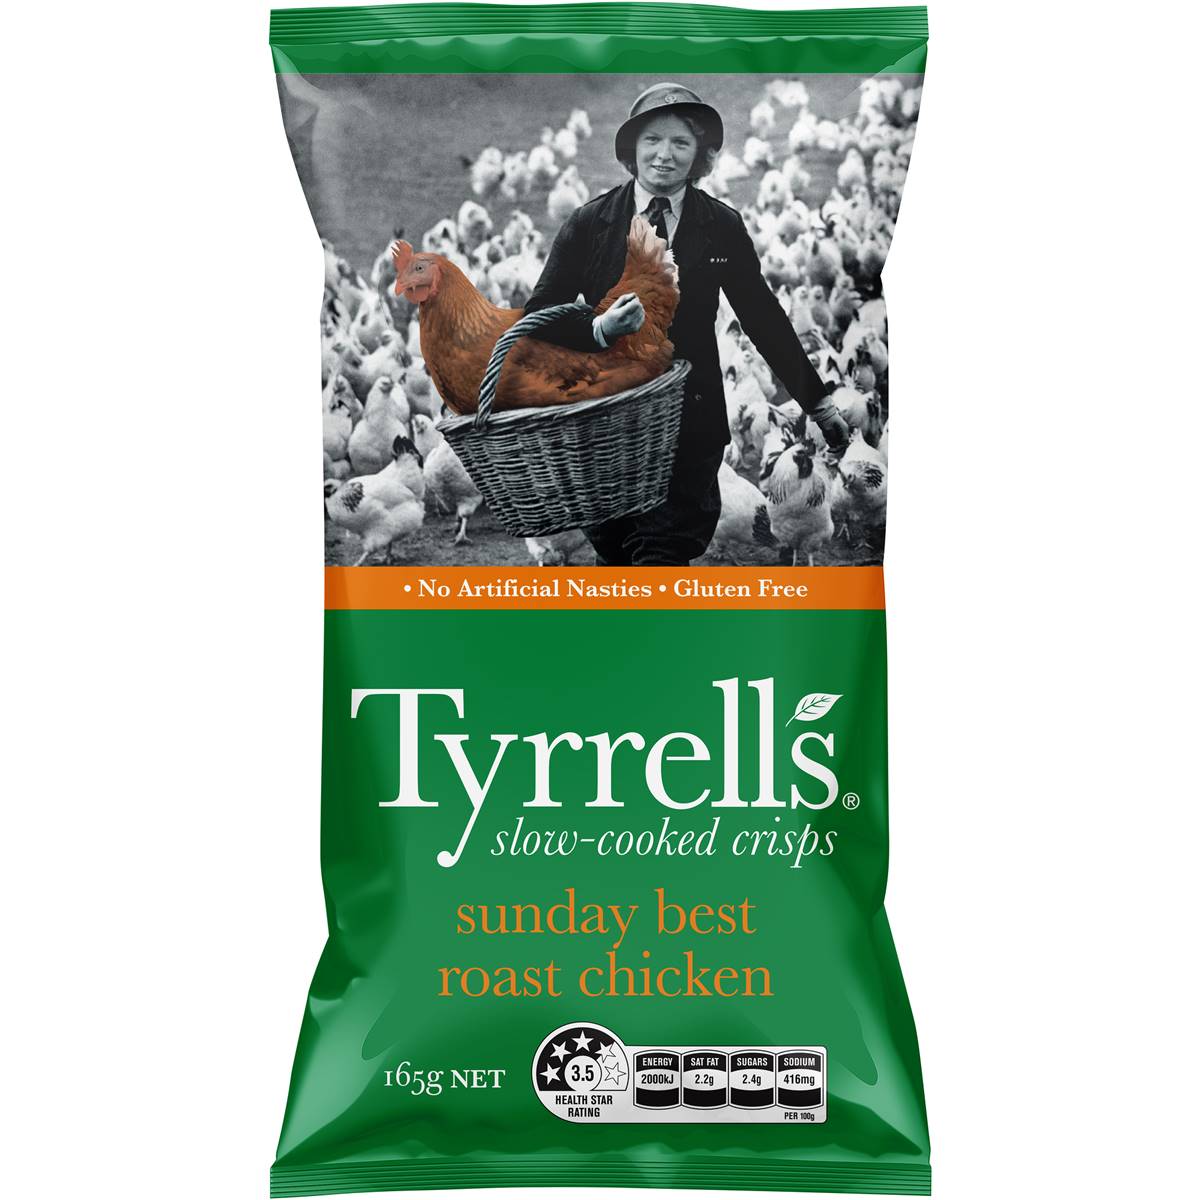 Calories in Tyrrells Tyrrell's Sunday Best Roast Chicken Chips